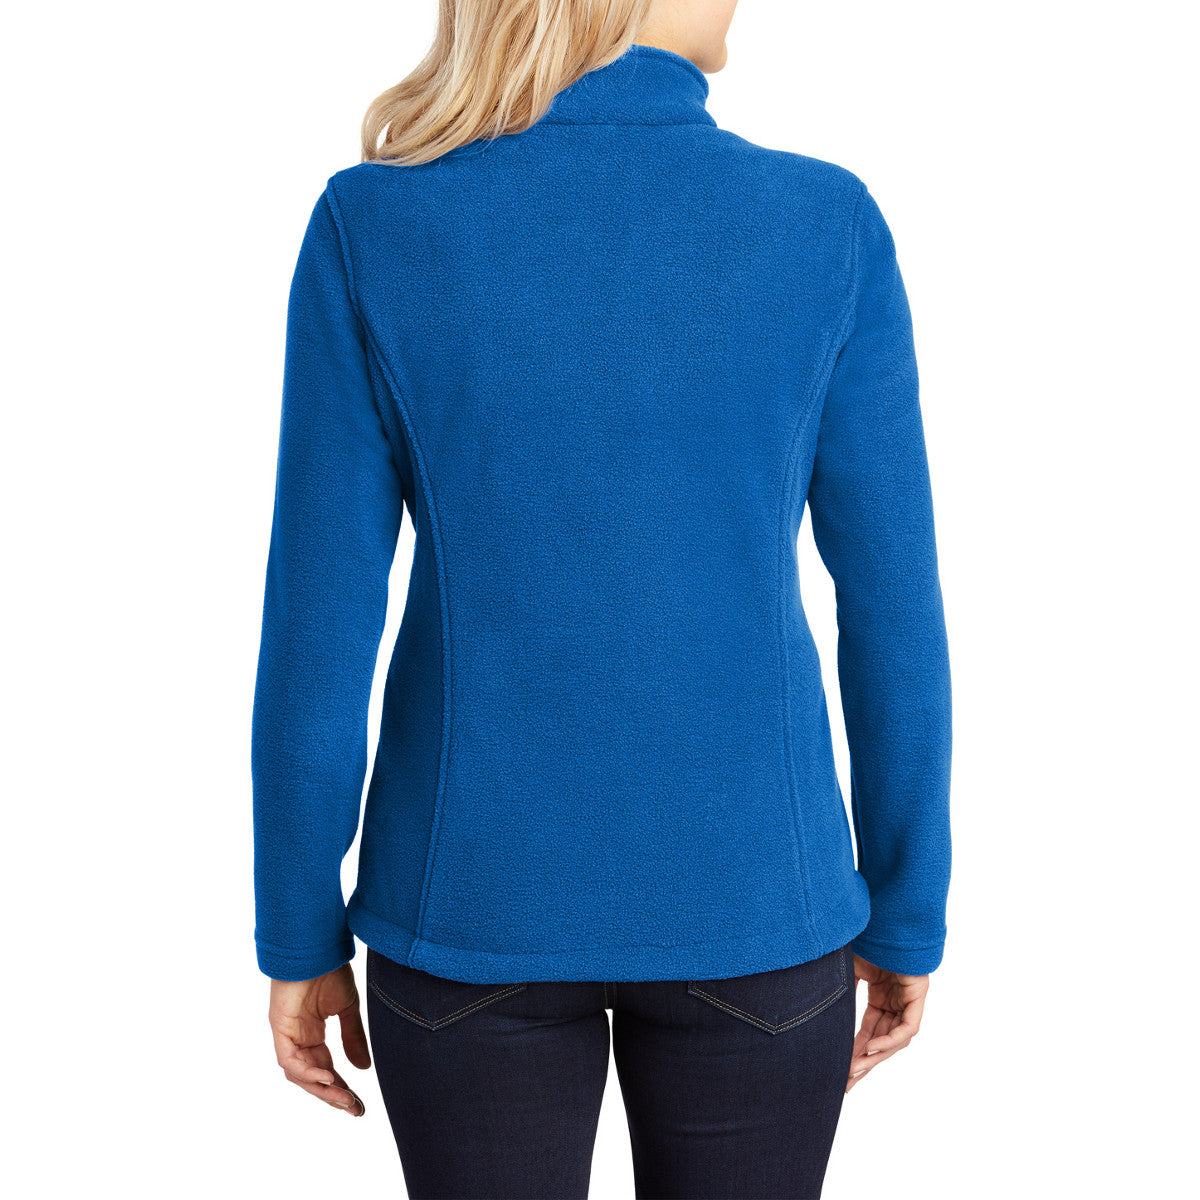 Women's Value Fleece Jacket